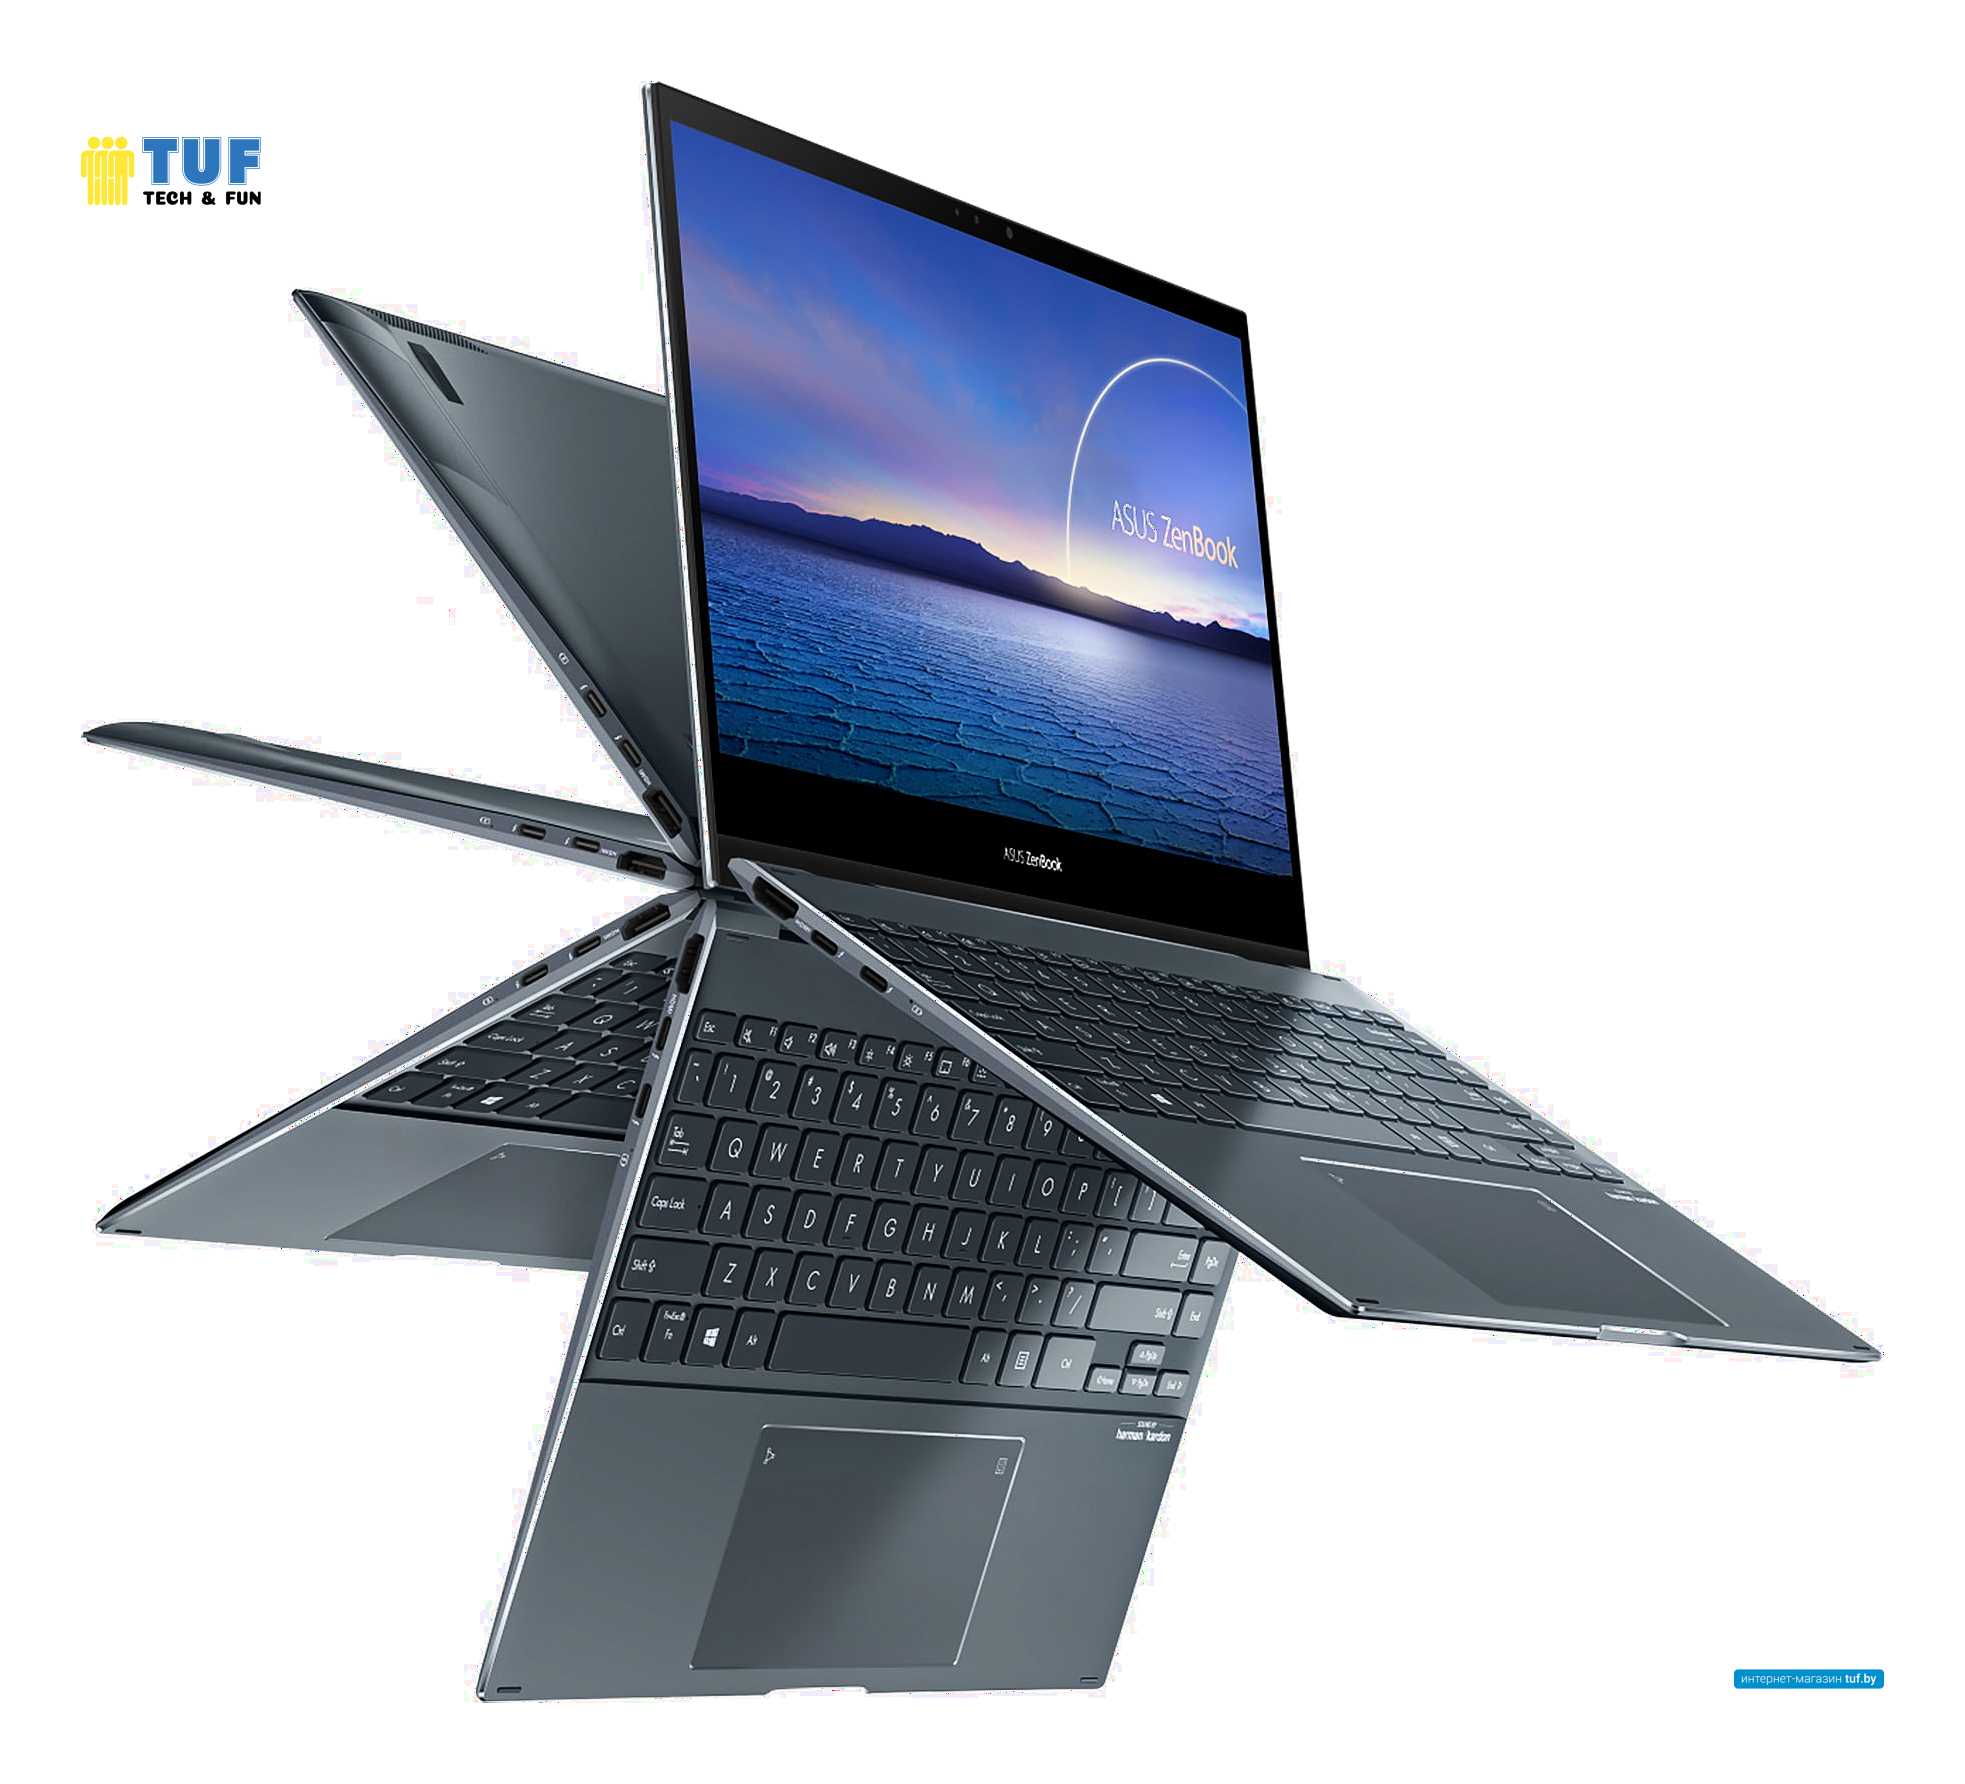 Ноутбук 2-в-1 ASUS ZenBook Flip 13 UX363EA-HP701X